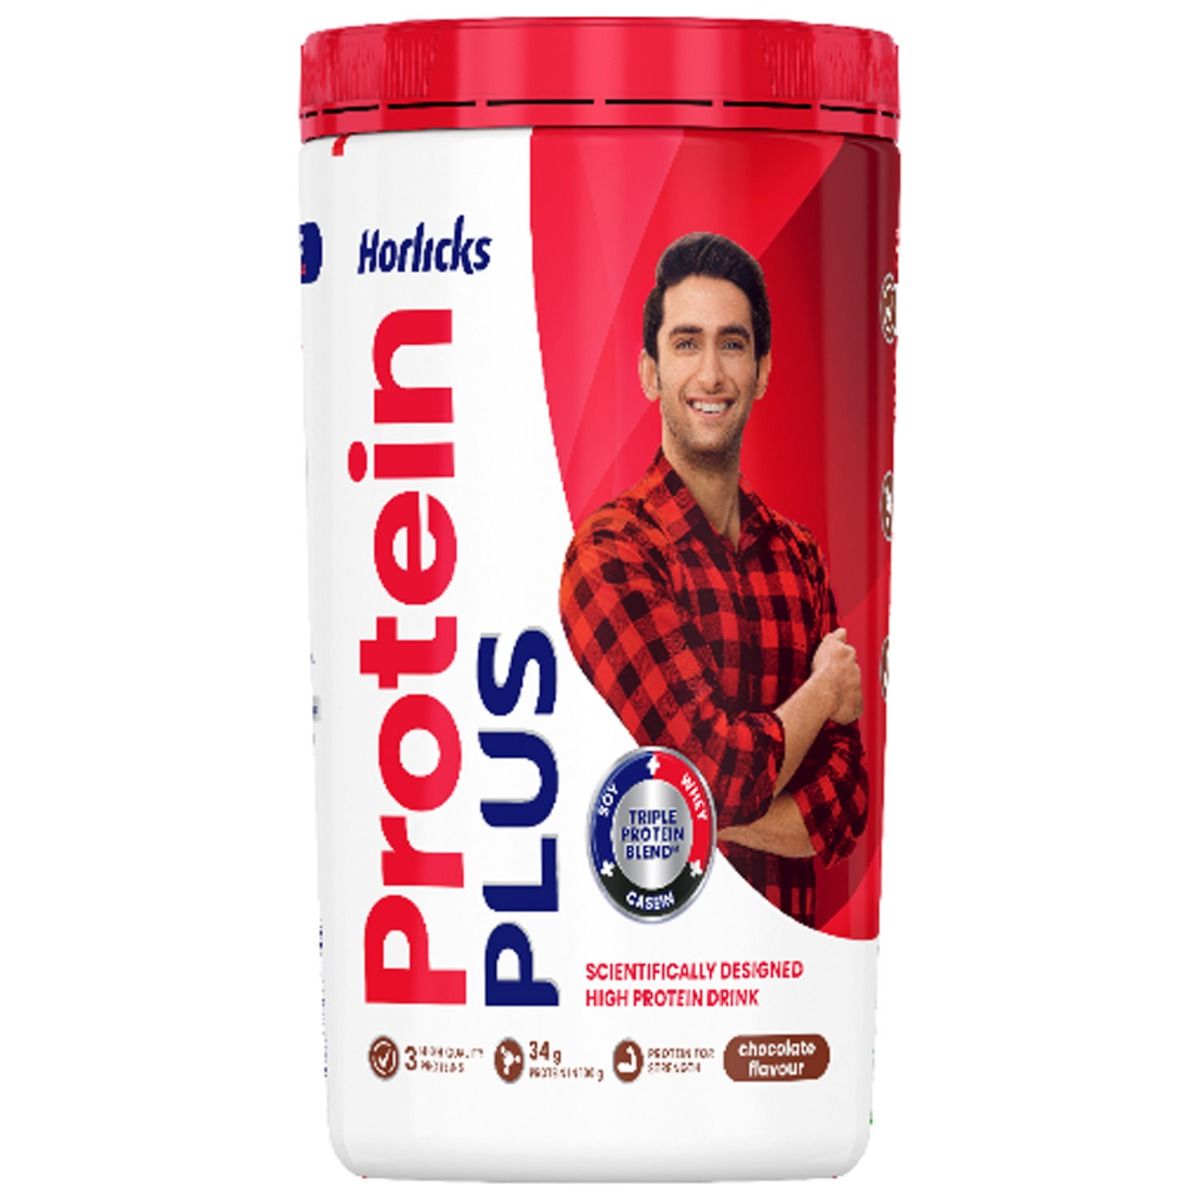 Buy Horlicks Protein+ Chocolate Flavoured Health and Nutrition Drink, 400 gm Jar Online